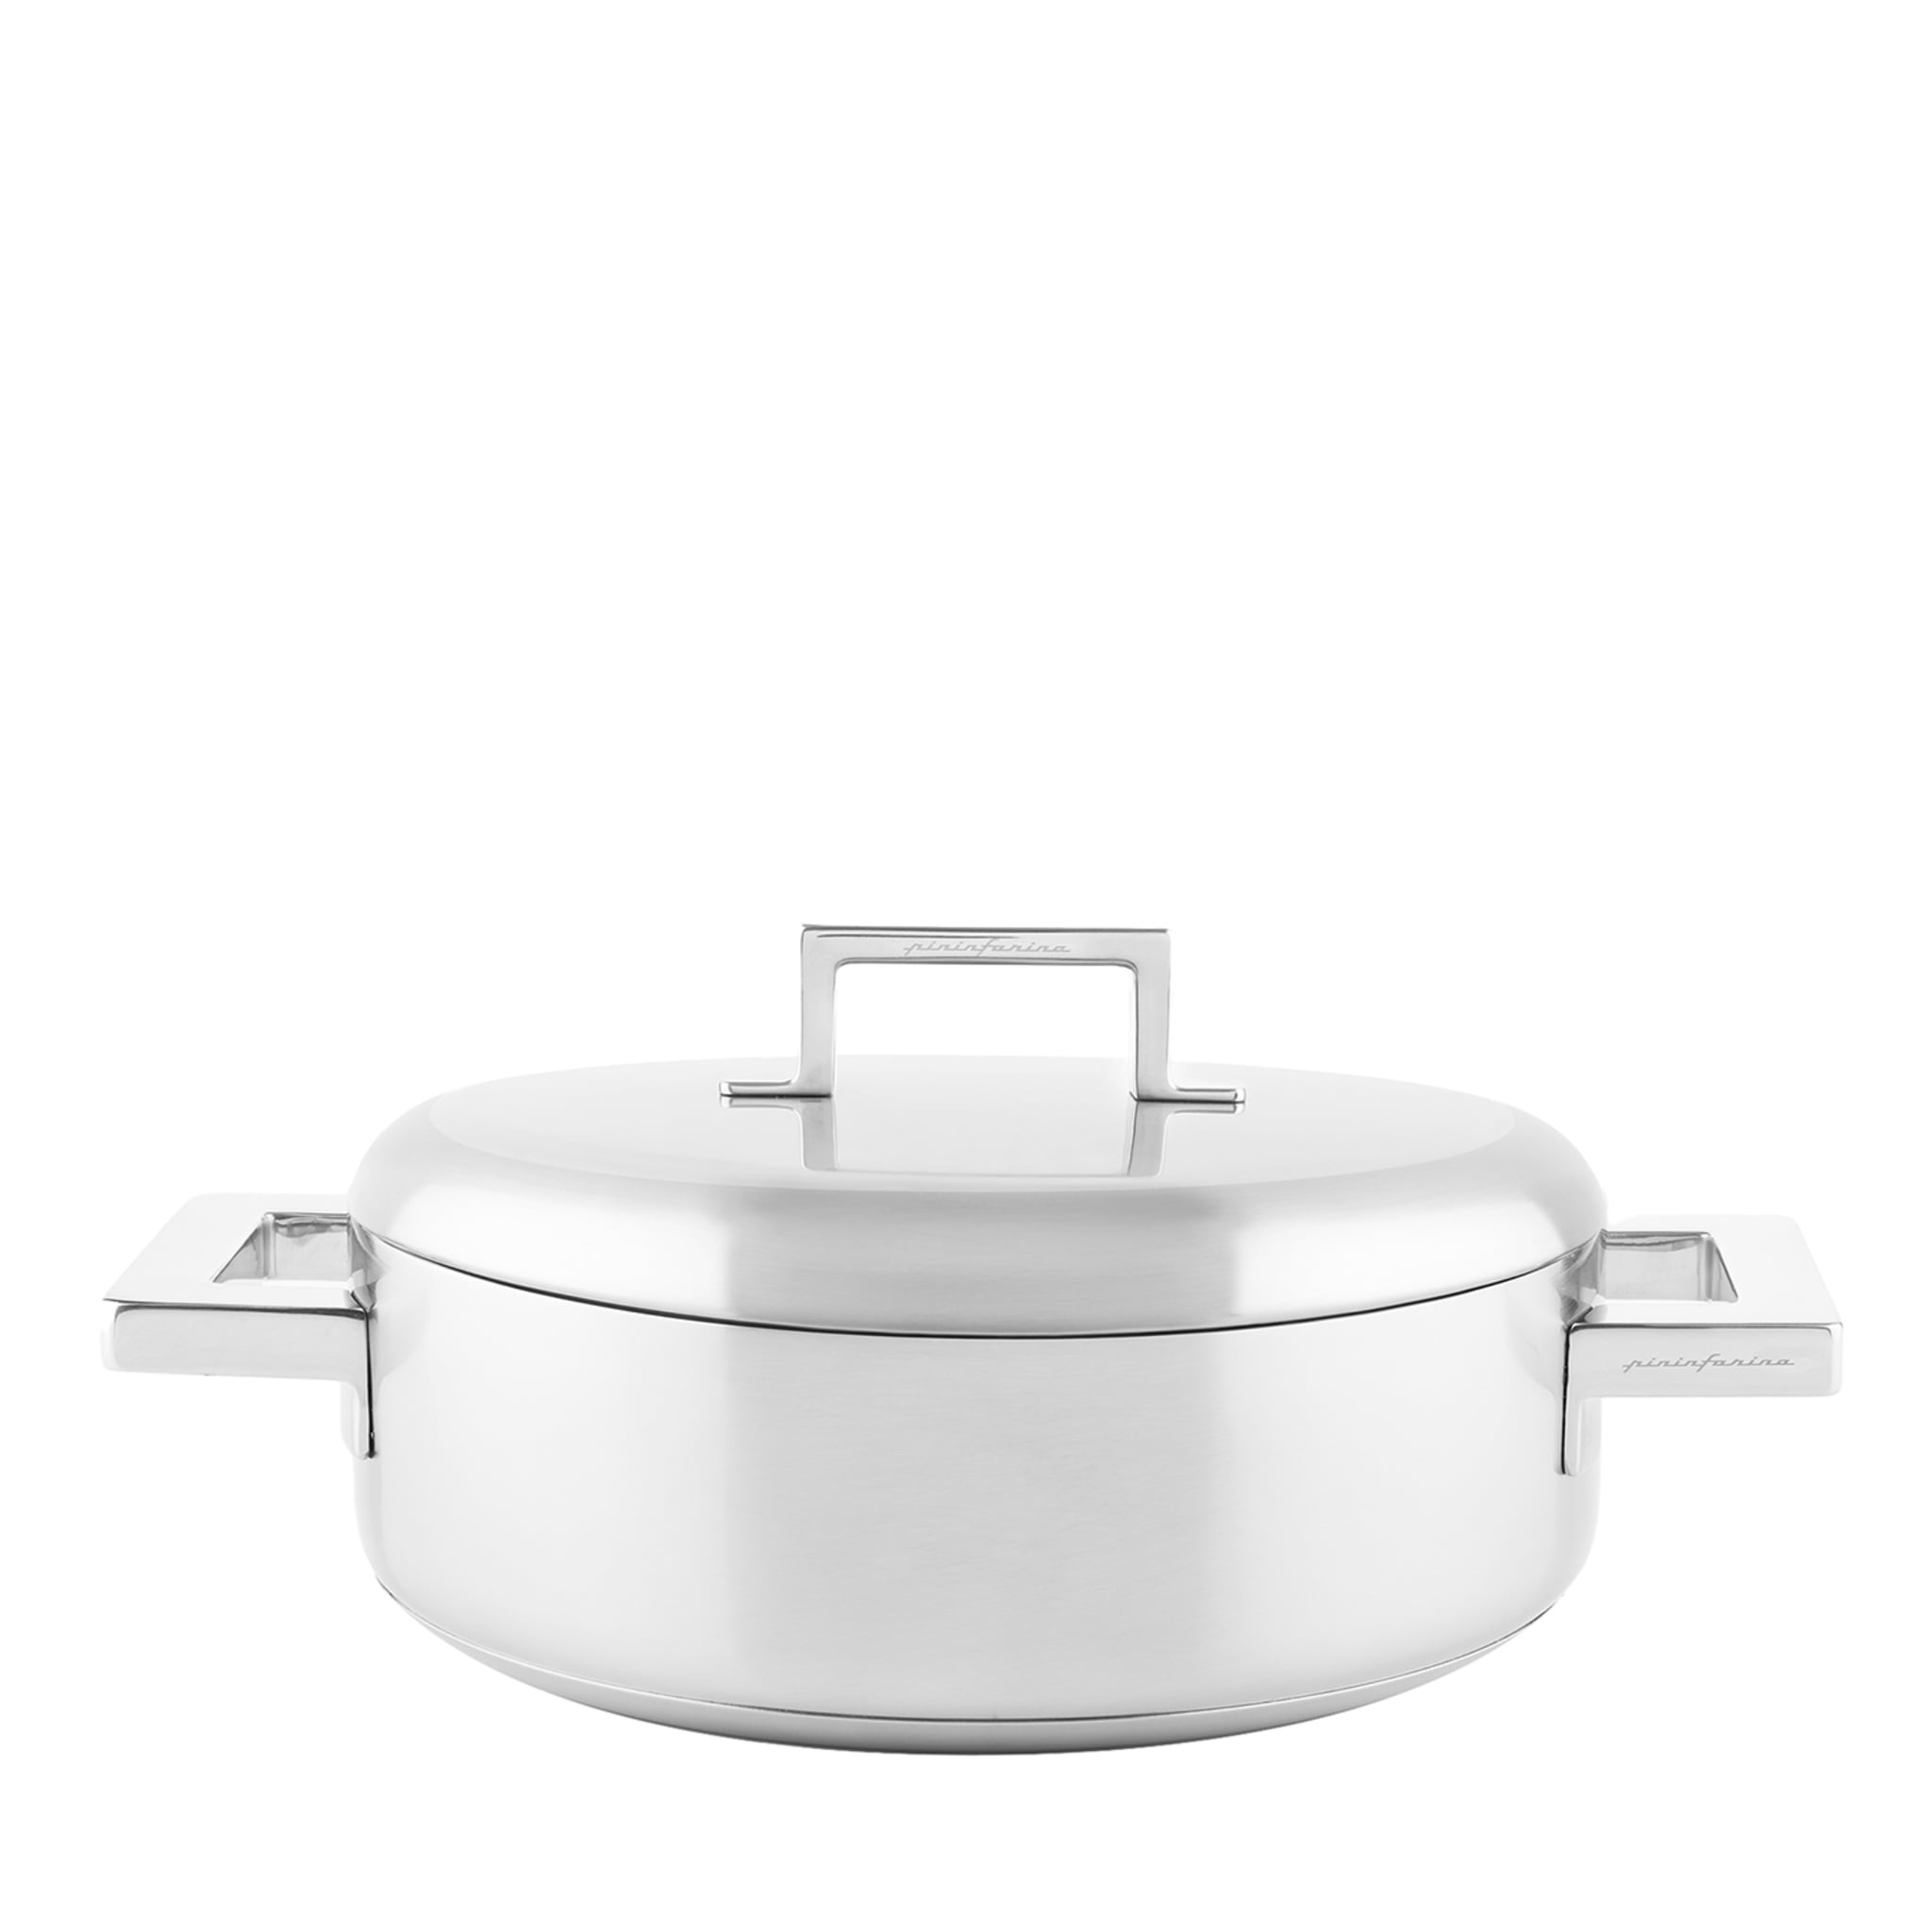 Frying pan 2 handles 'Attiva' gold - Attiva Gold - Cookware